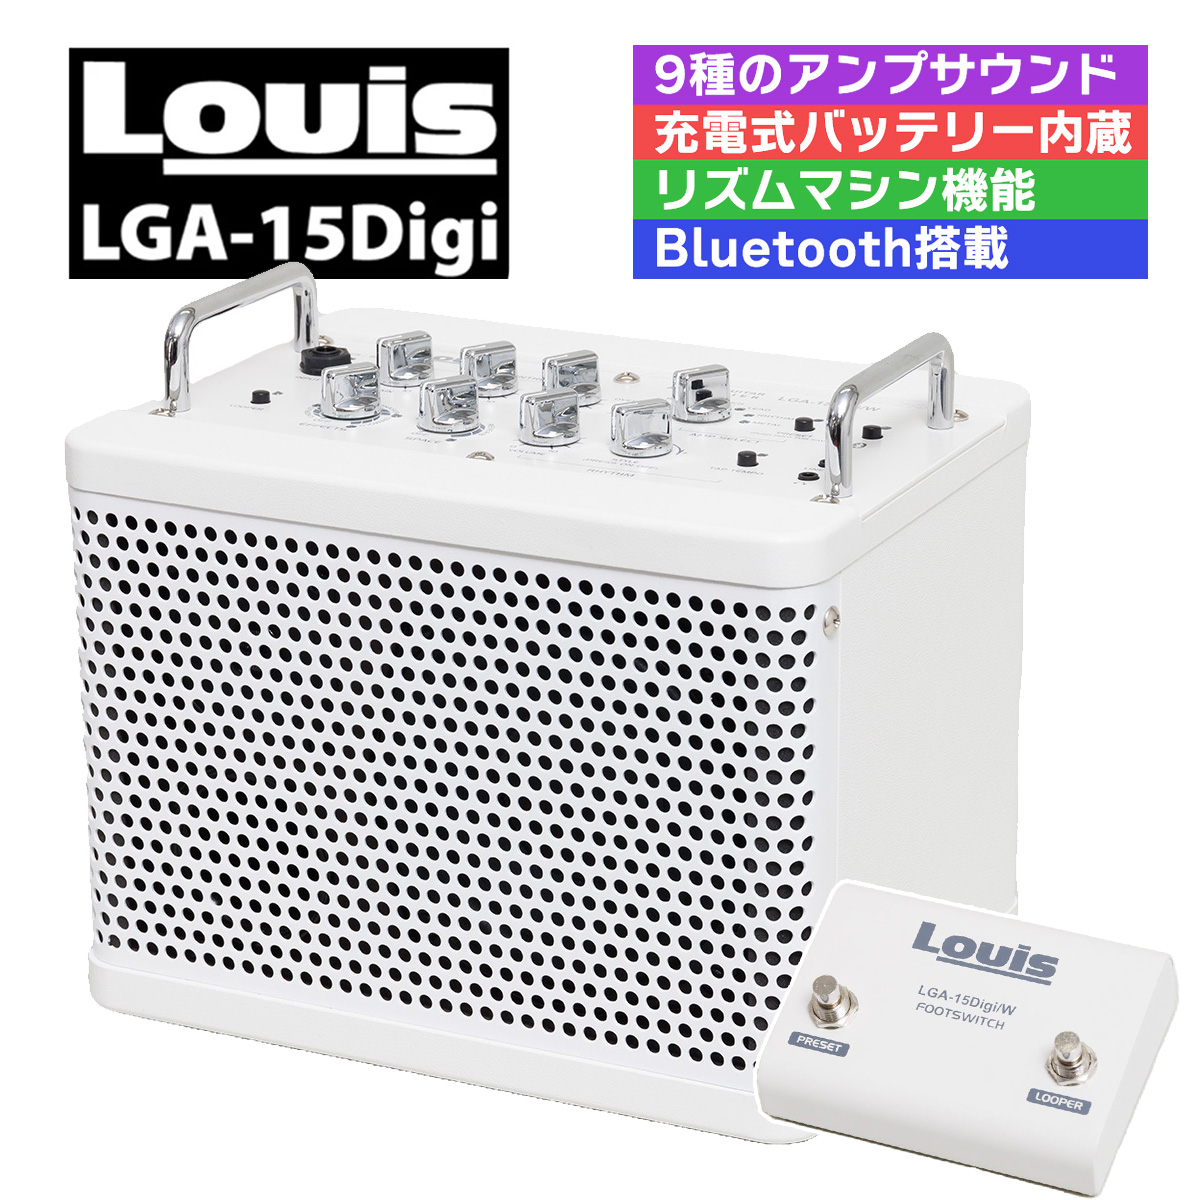 Louis  (ルイス) Louis LGA-15Digi/W ギターアンプ ホワイト 白 Bluetooth・リズムマシーン・ルーパー搭載 充電4時間駆動バッテリー内蔵 ルイス 【 モラージュ菖蒲店 】